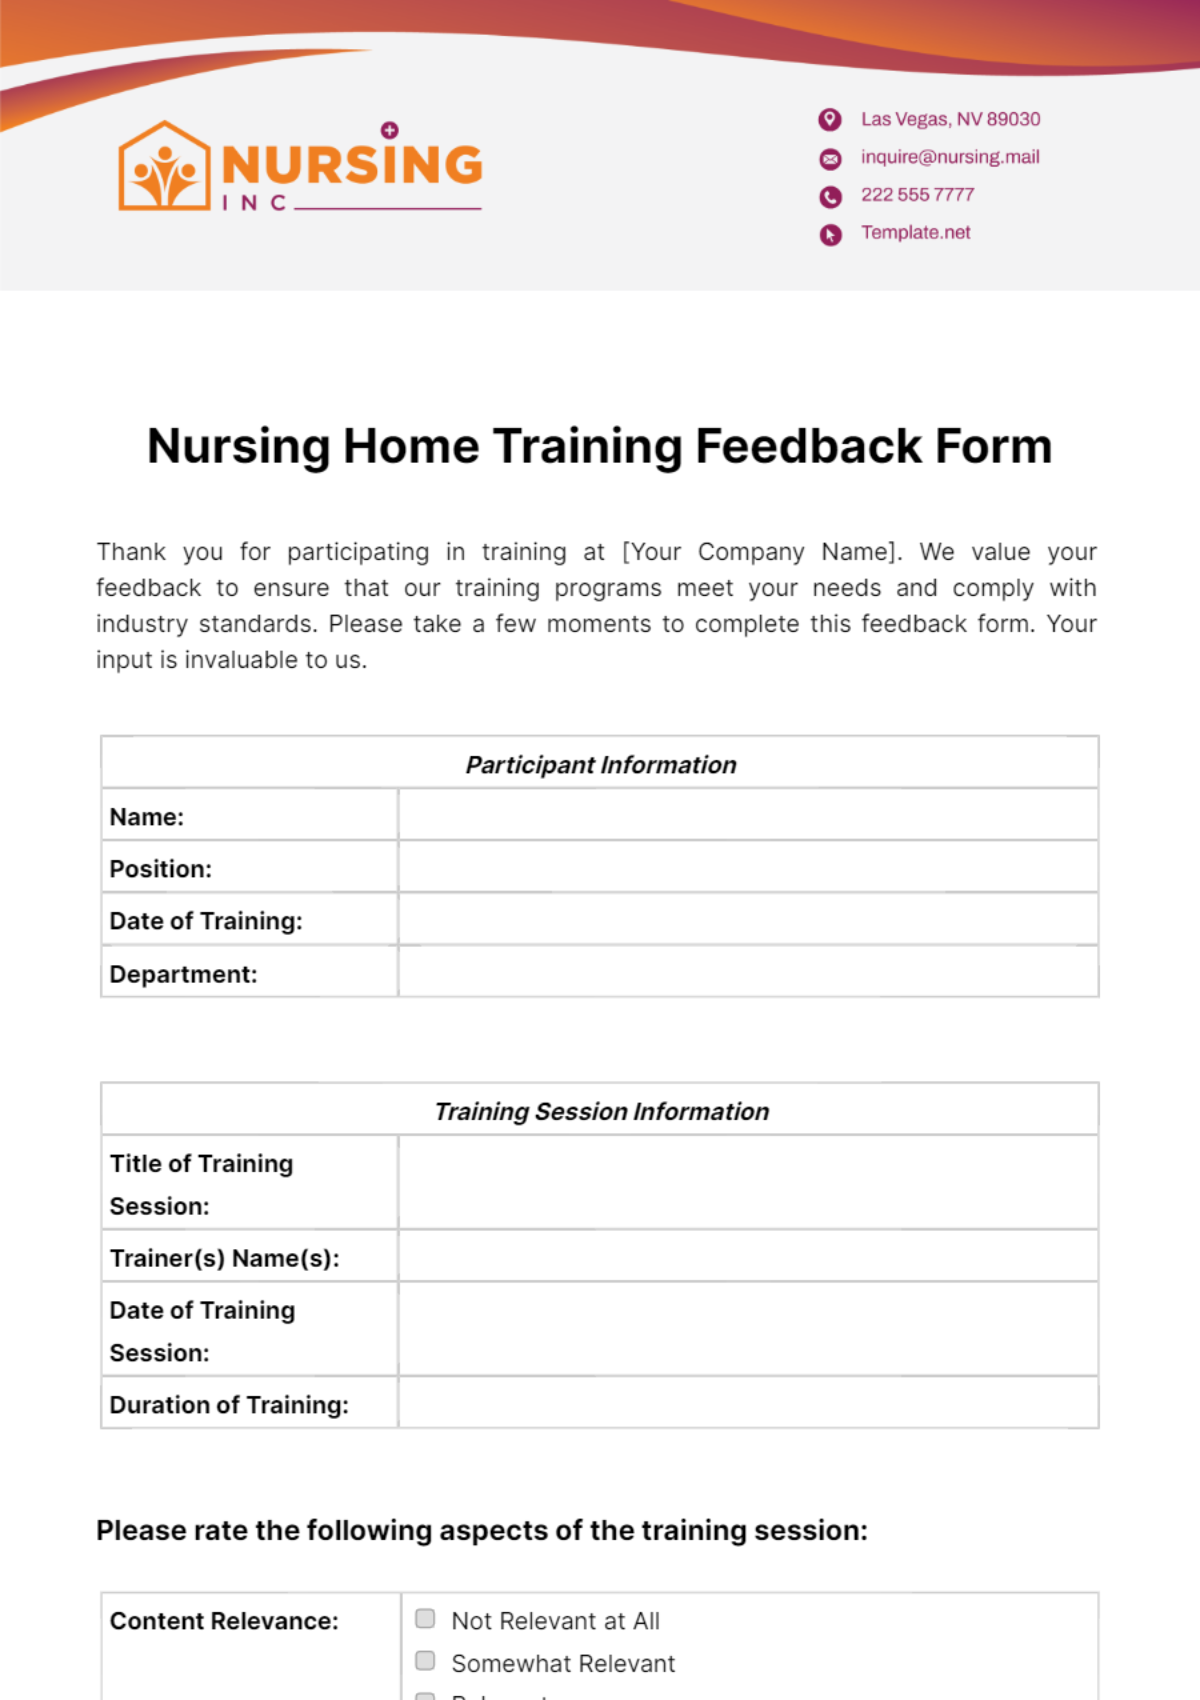 Nursing Home Training Feedback Form Template